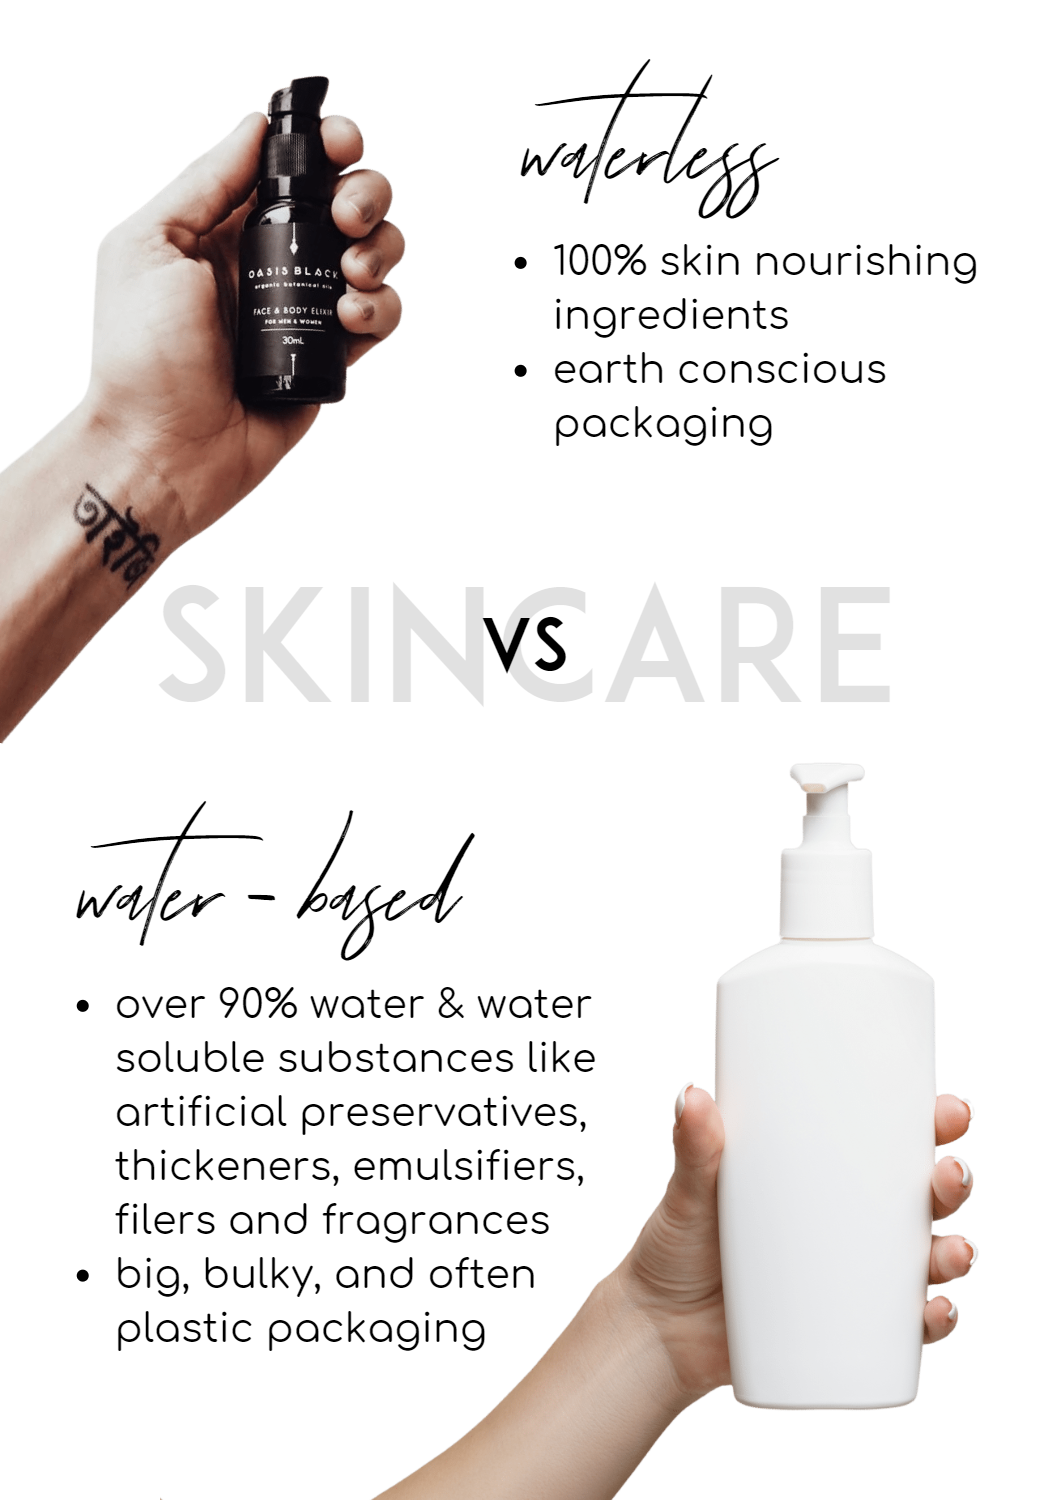 Waterless Skincare (aka Anhydrous Skincare) vs Water-Based Skincare | Oasis Black - Organic Botanical Skincare